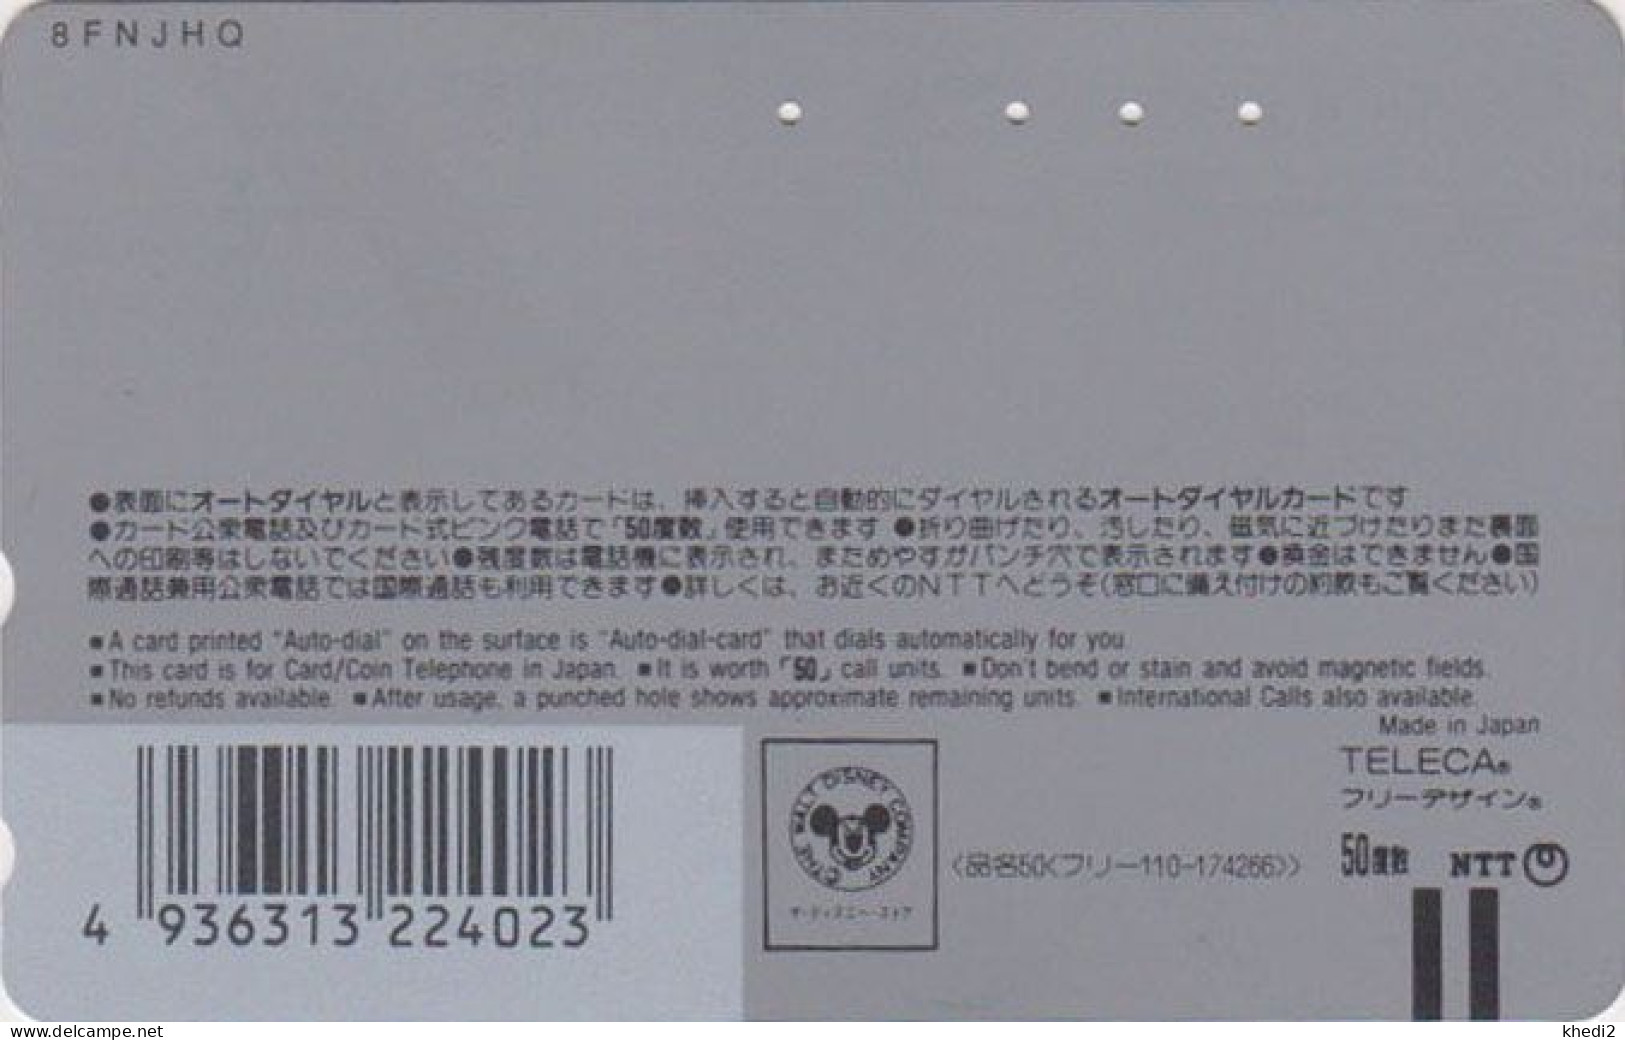 Télécarte JAPON / 110-174266 - DISNEY - FILM BEAUTY & THE BEAST ** BROADWAY MUSICAL ** - Movie JAPAN Free Phonecard - Disney